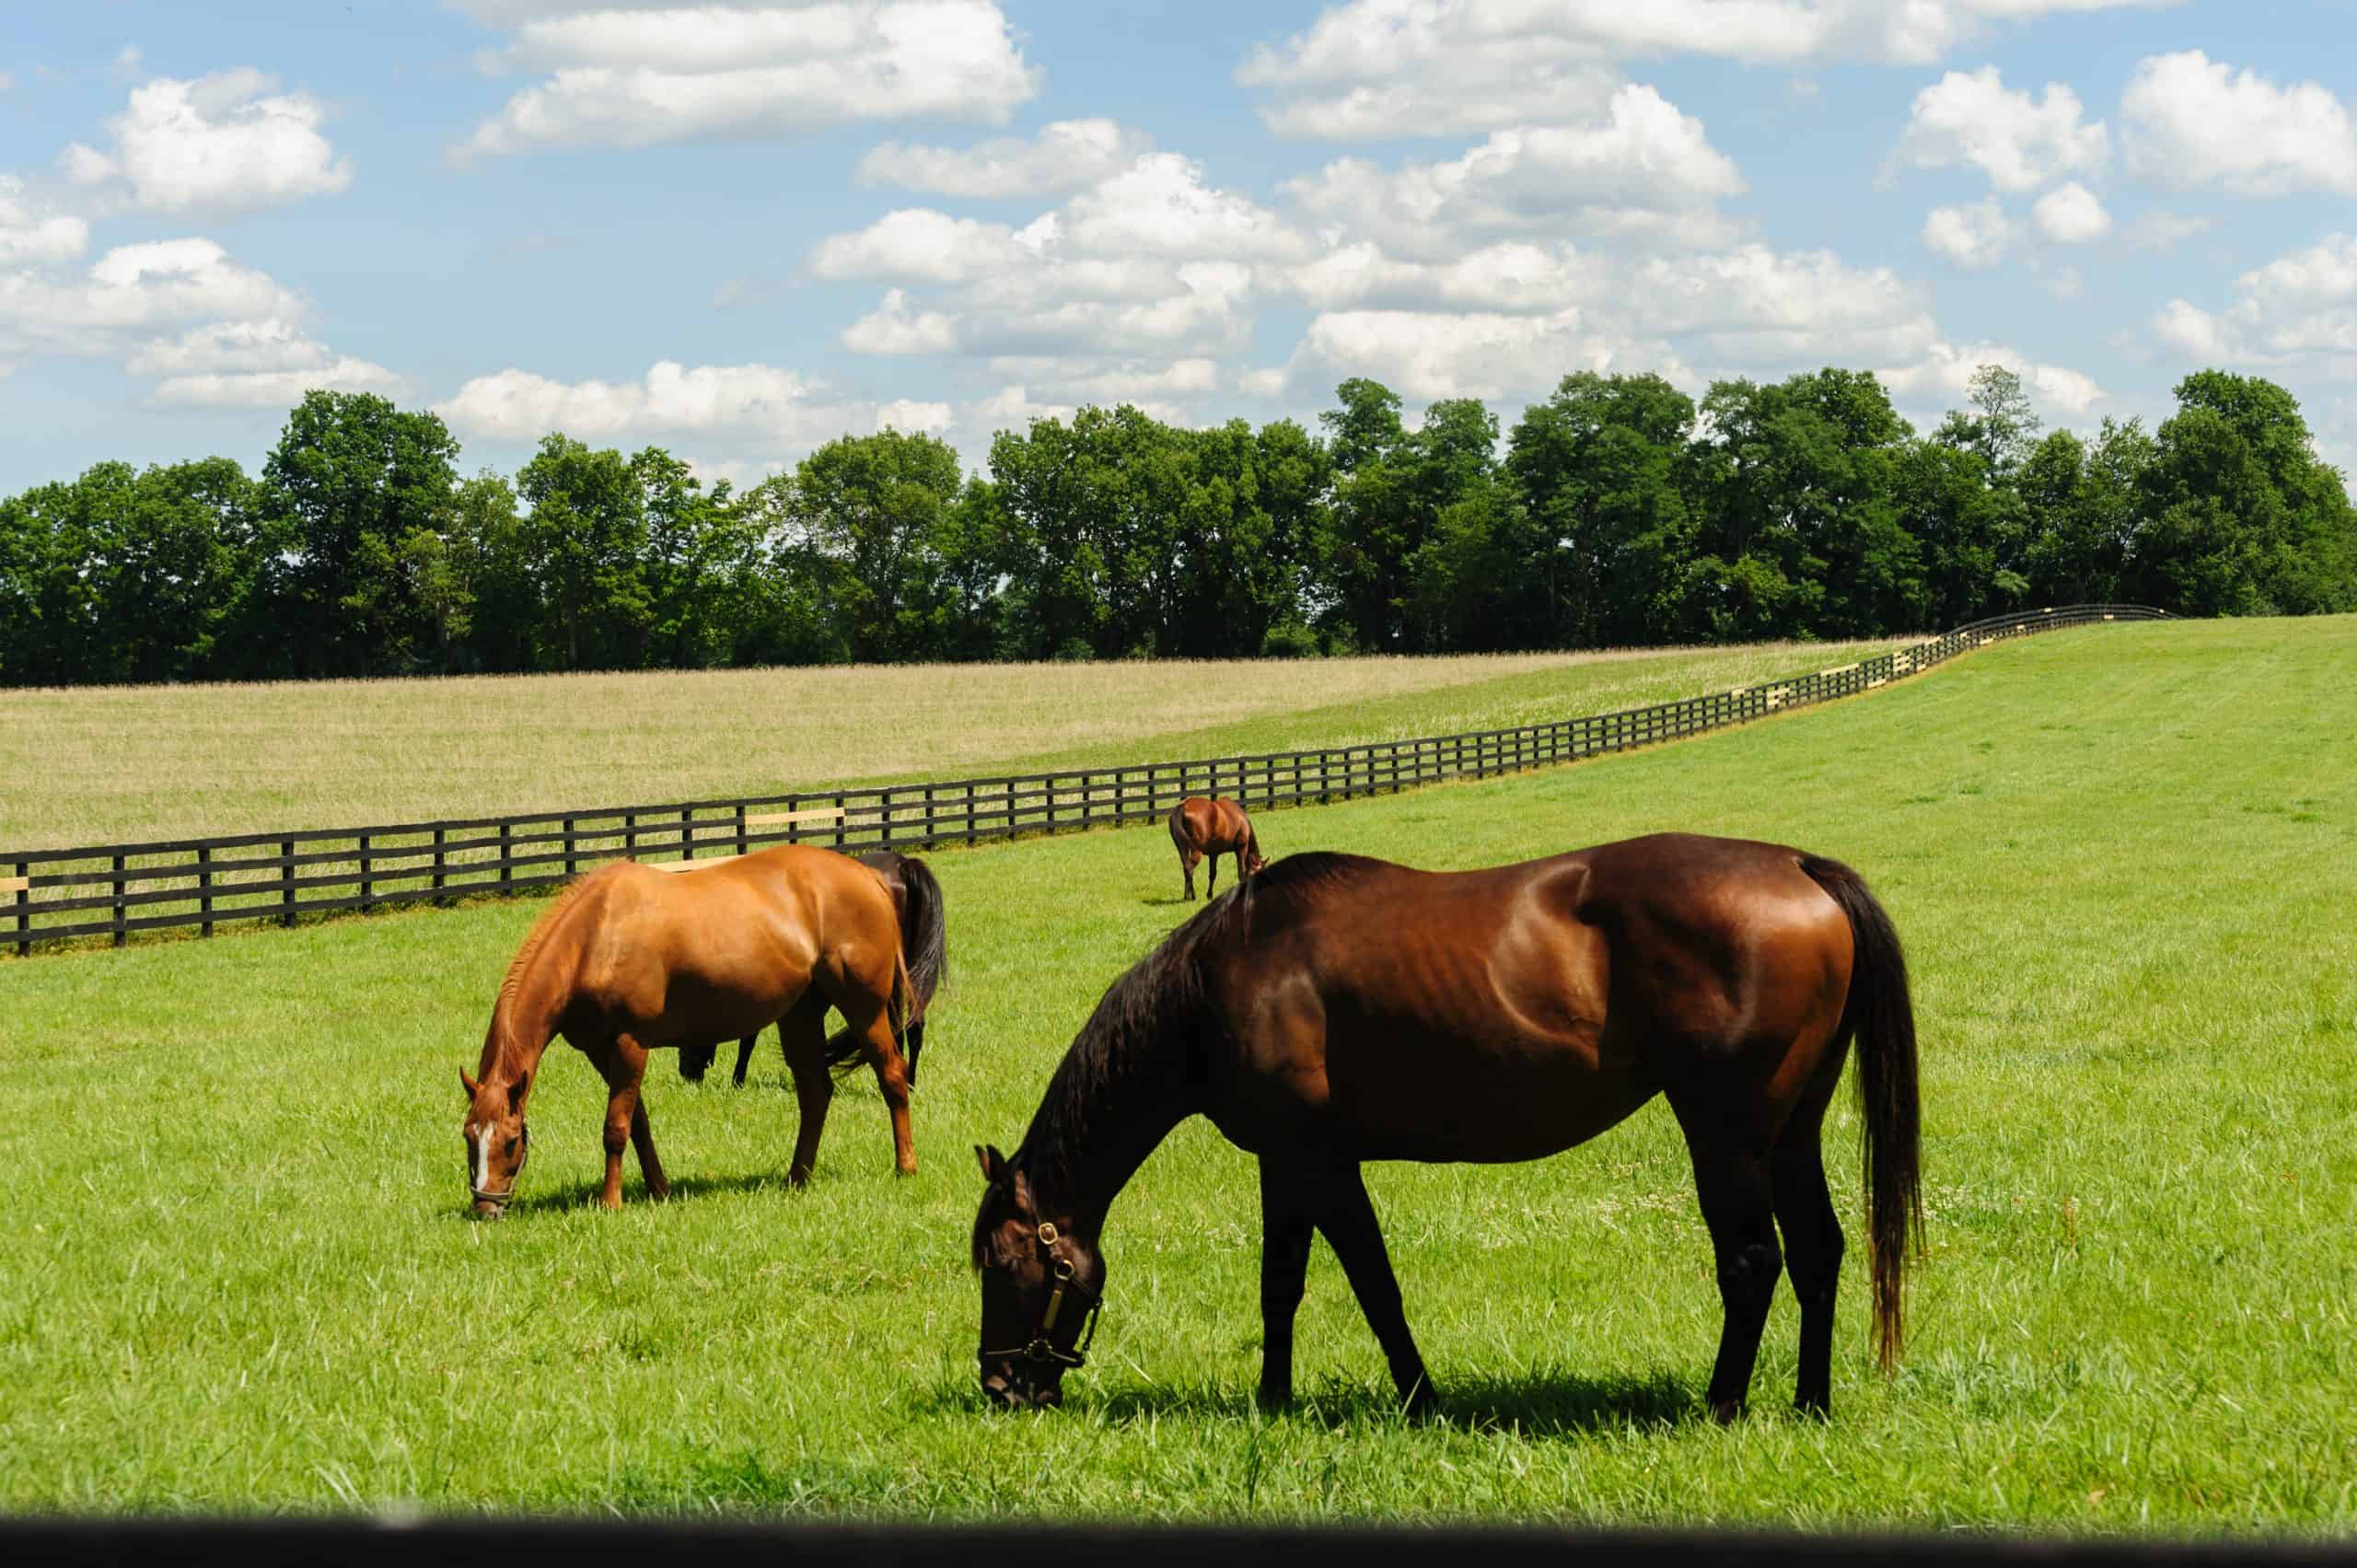 Thoroughbred horses grazing on a Kentucky horse farm